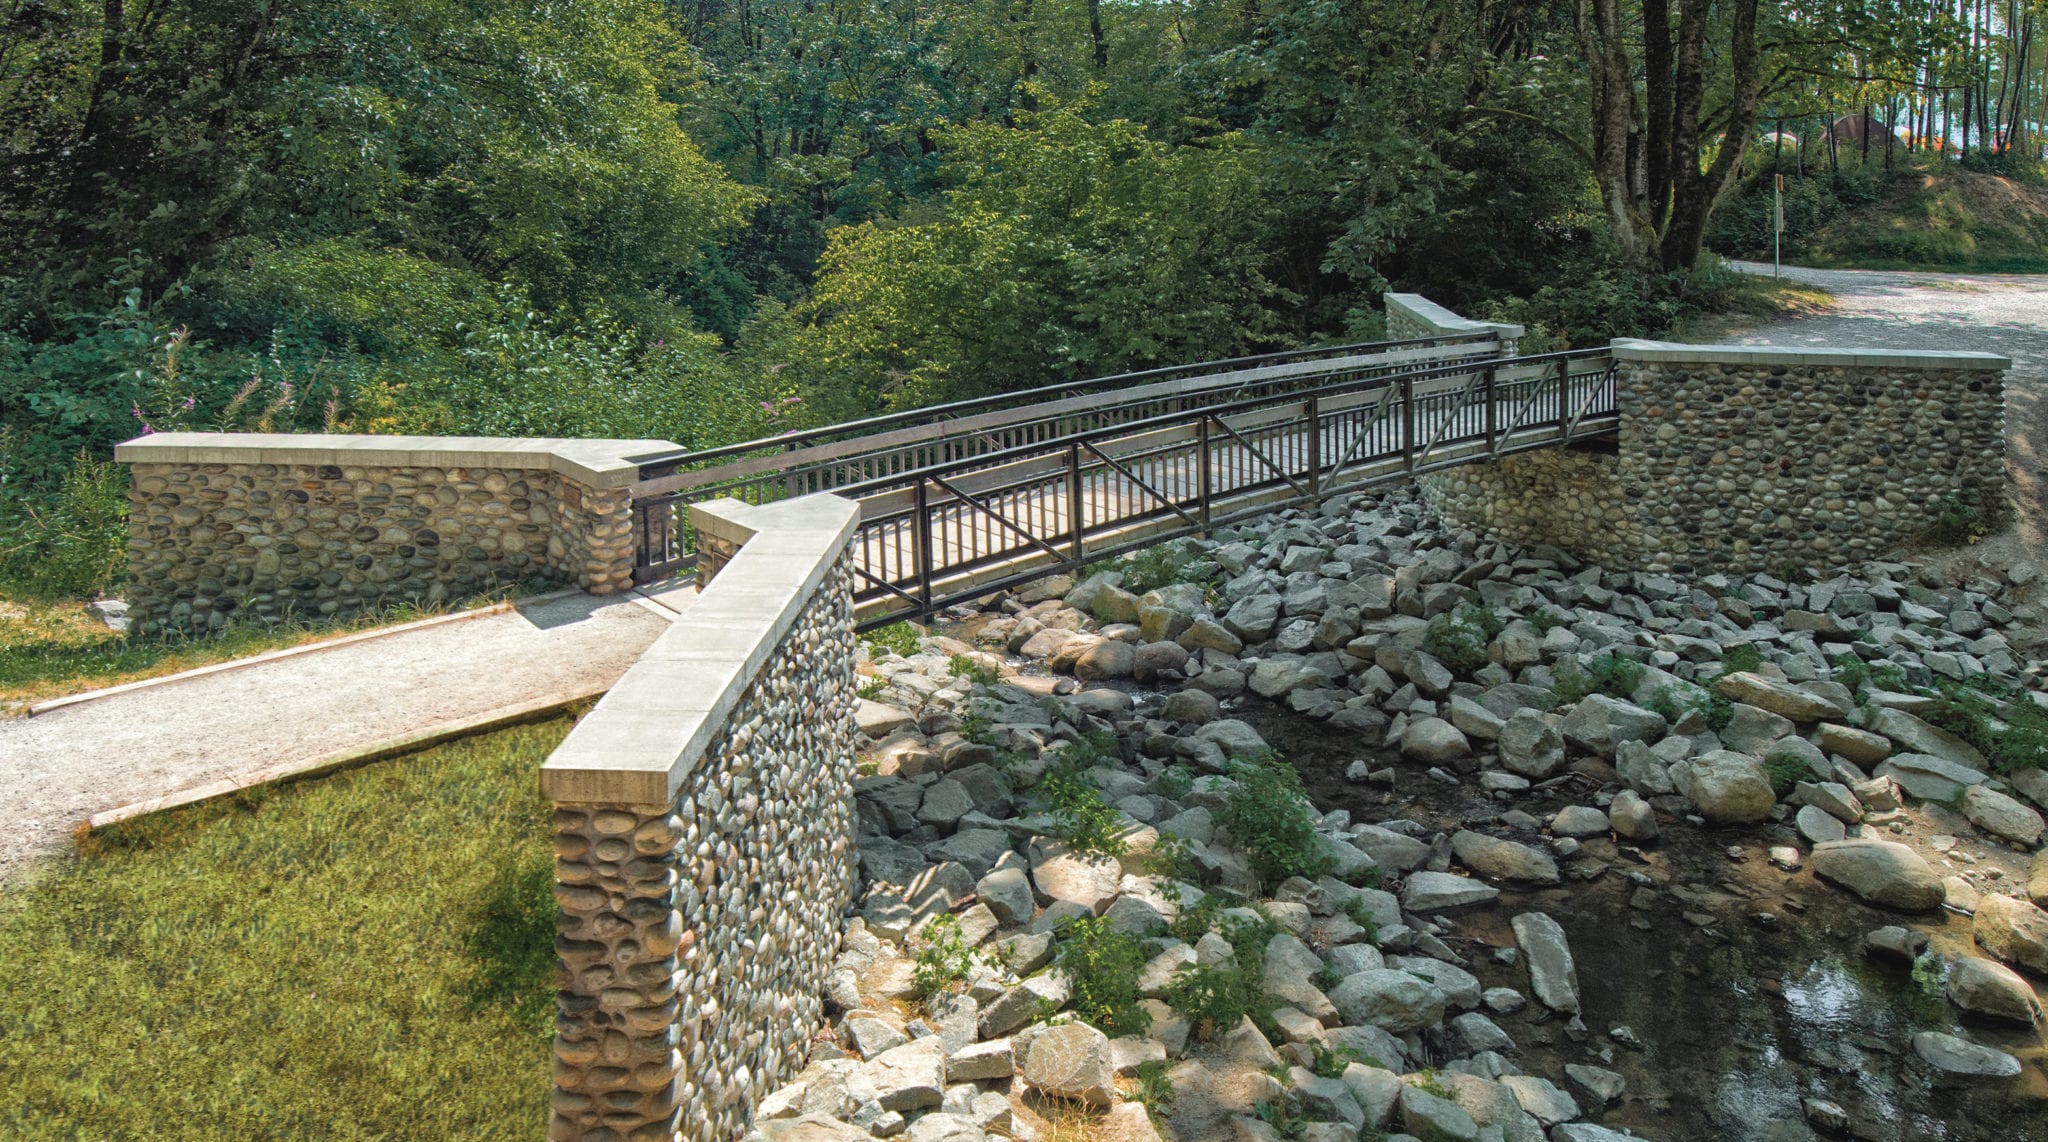 Prefabricated hiking trail bridge design with natural stone abutments